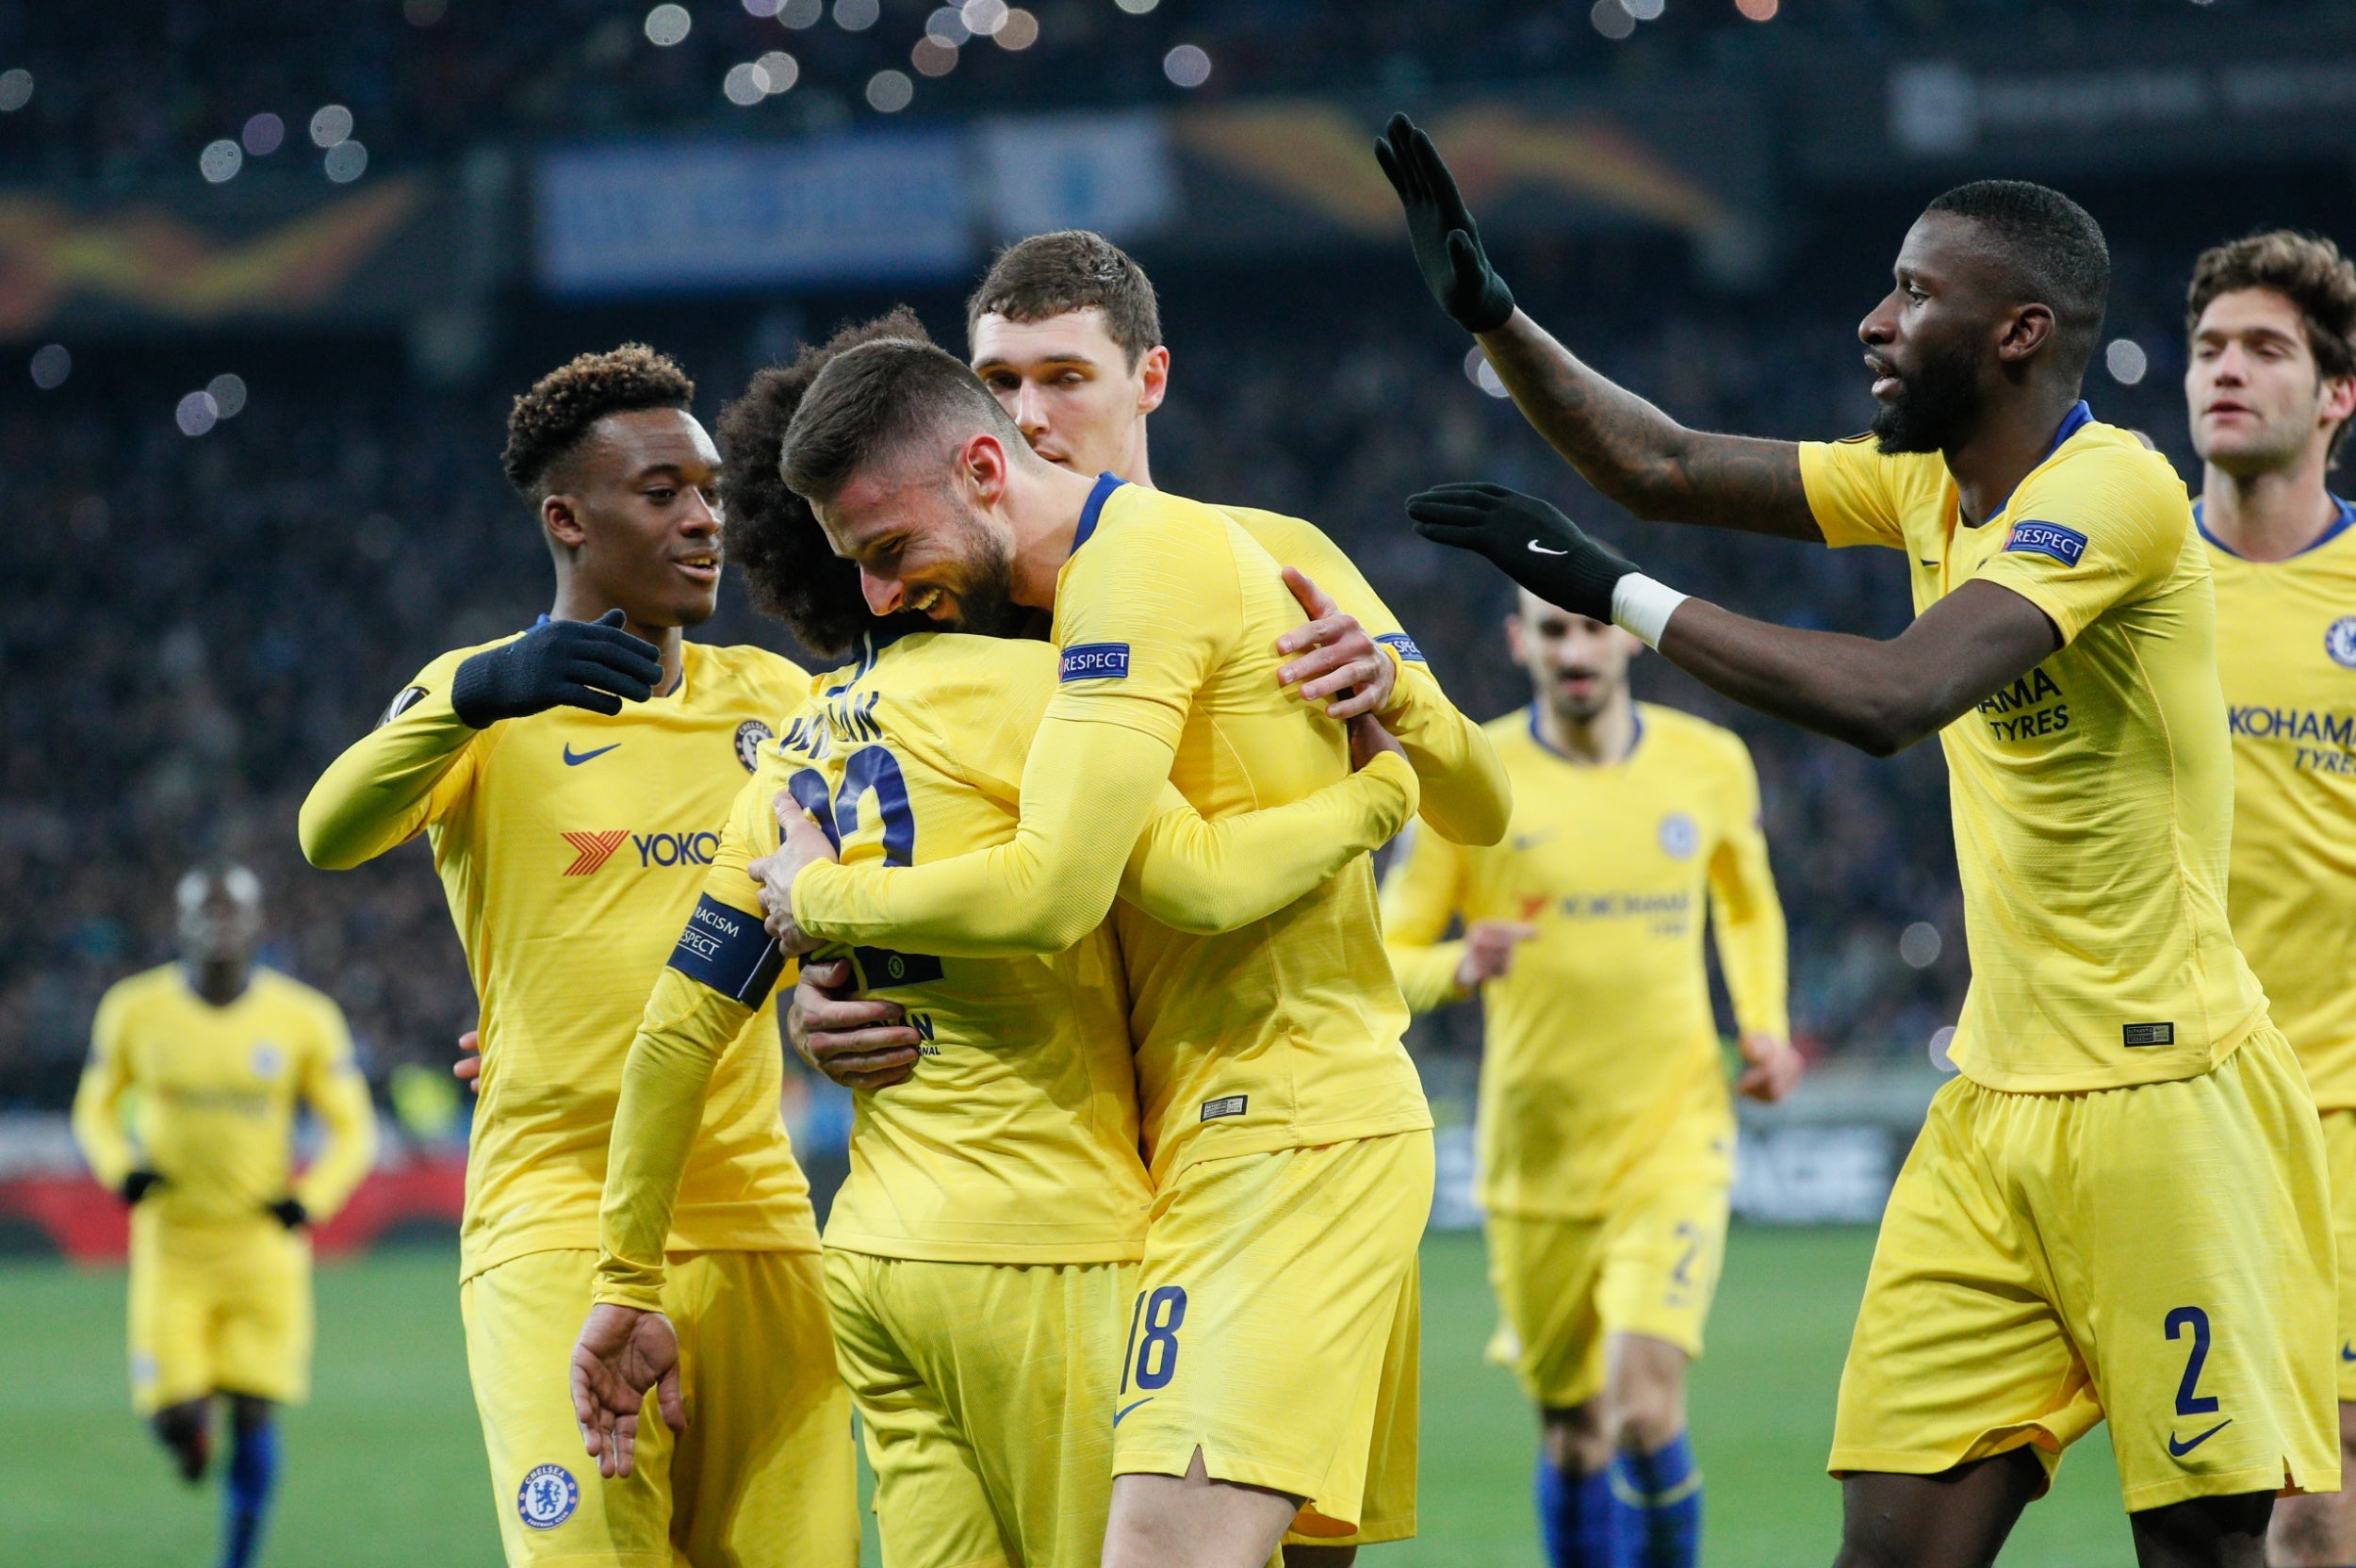 Chelsea thrashed Dynamo midweek